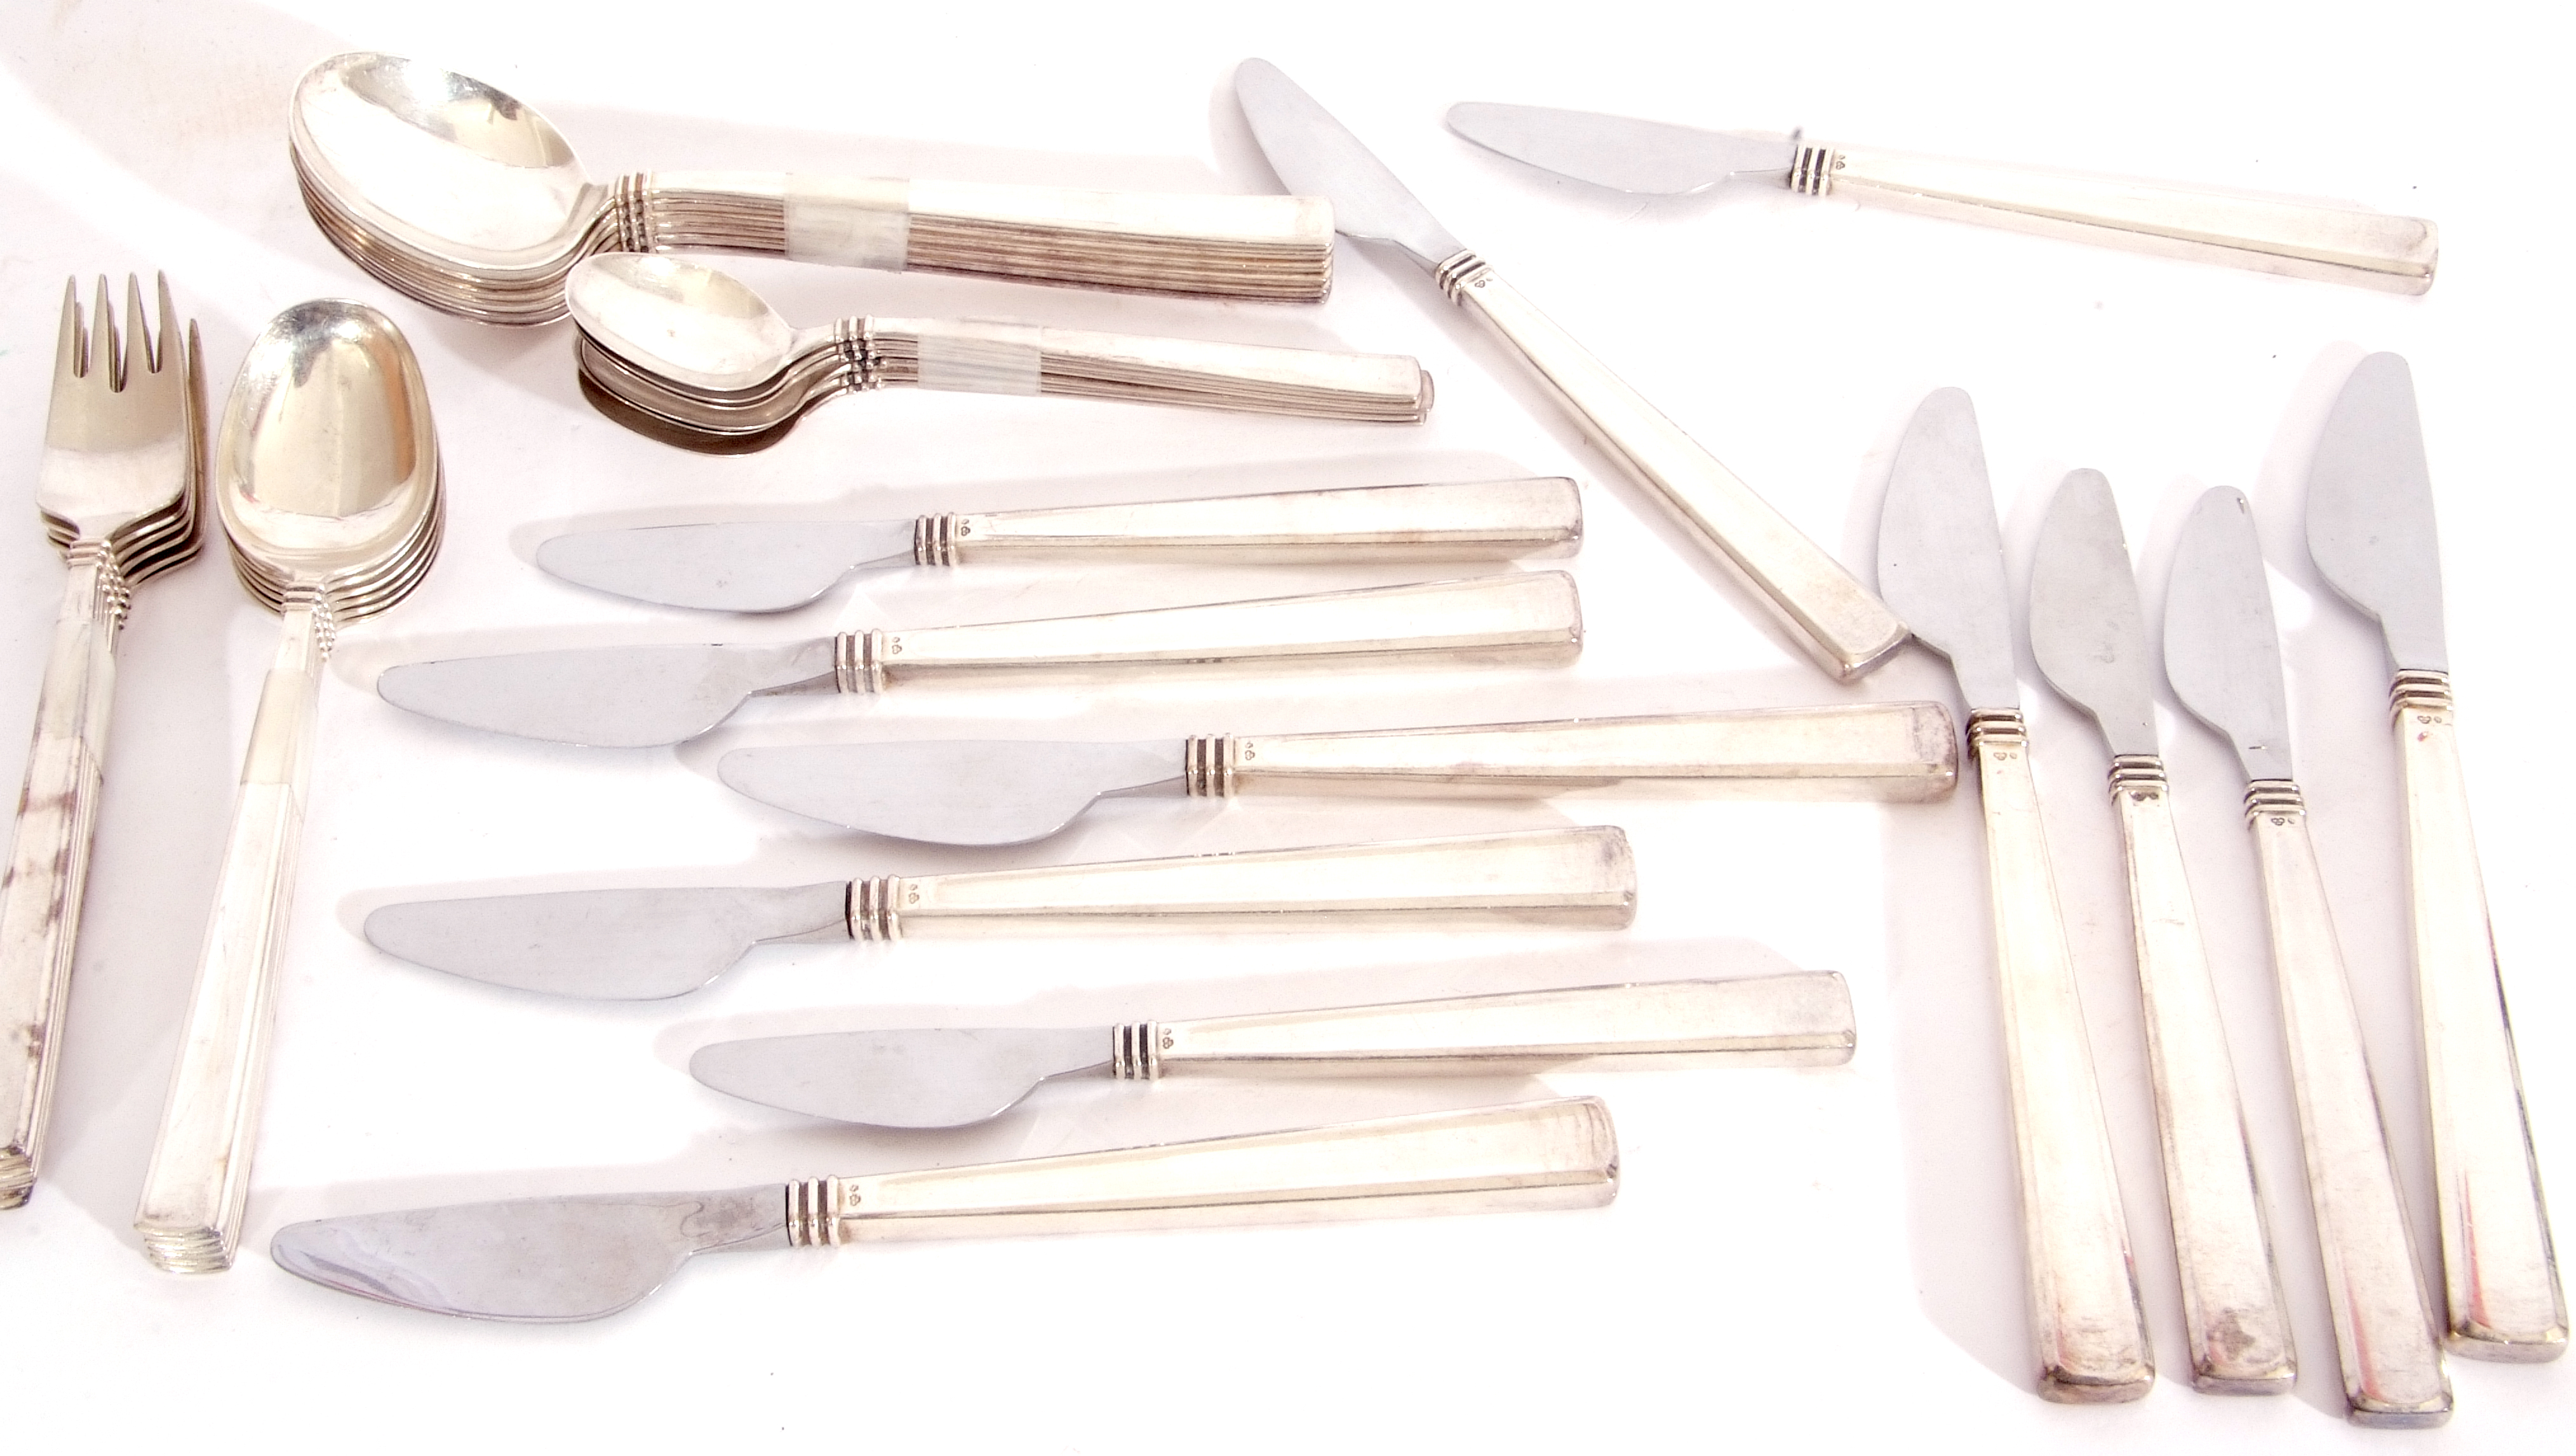 20th century Swedish part flatware service for six, comprising soup spoons, dessert spoons, tea